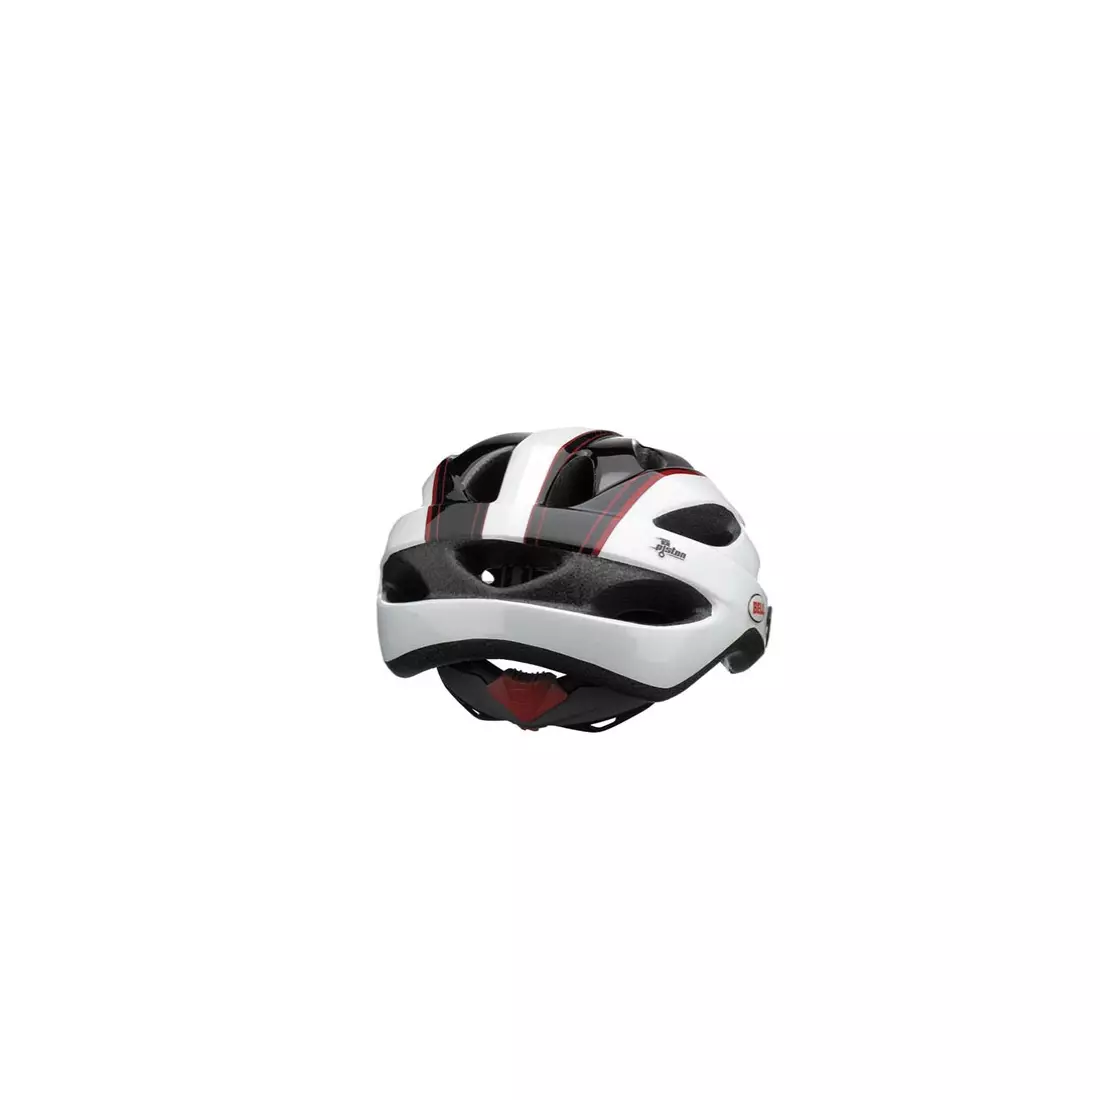 BELL PISTON bicycle helmet - white/black lines